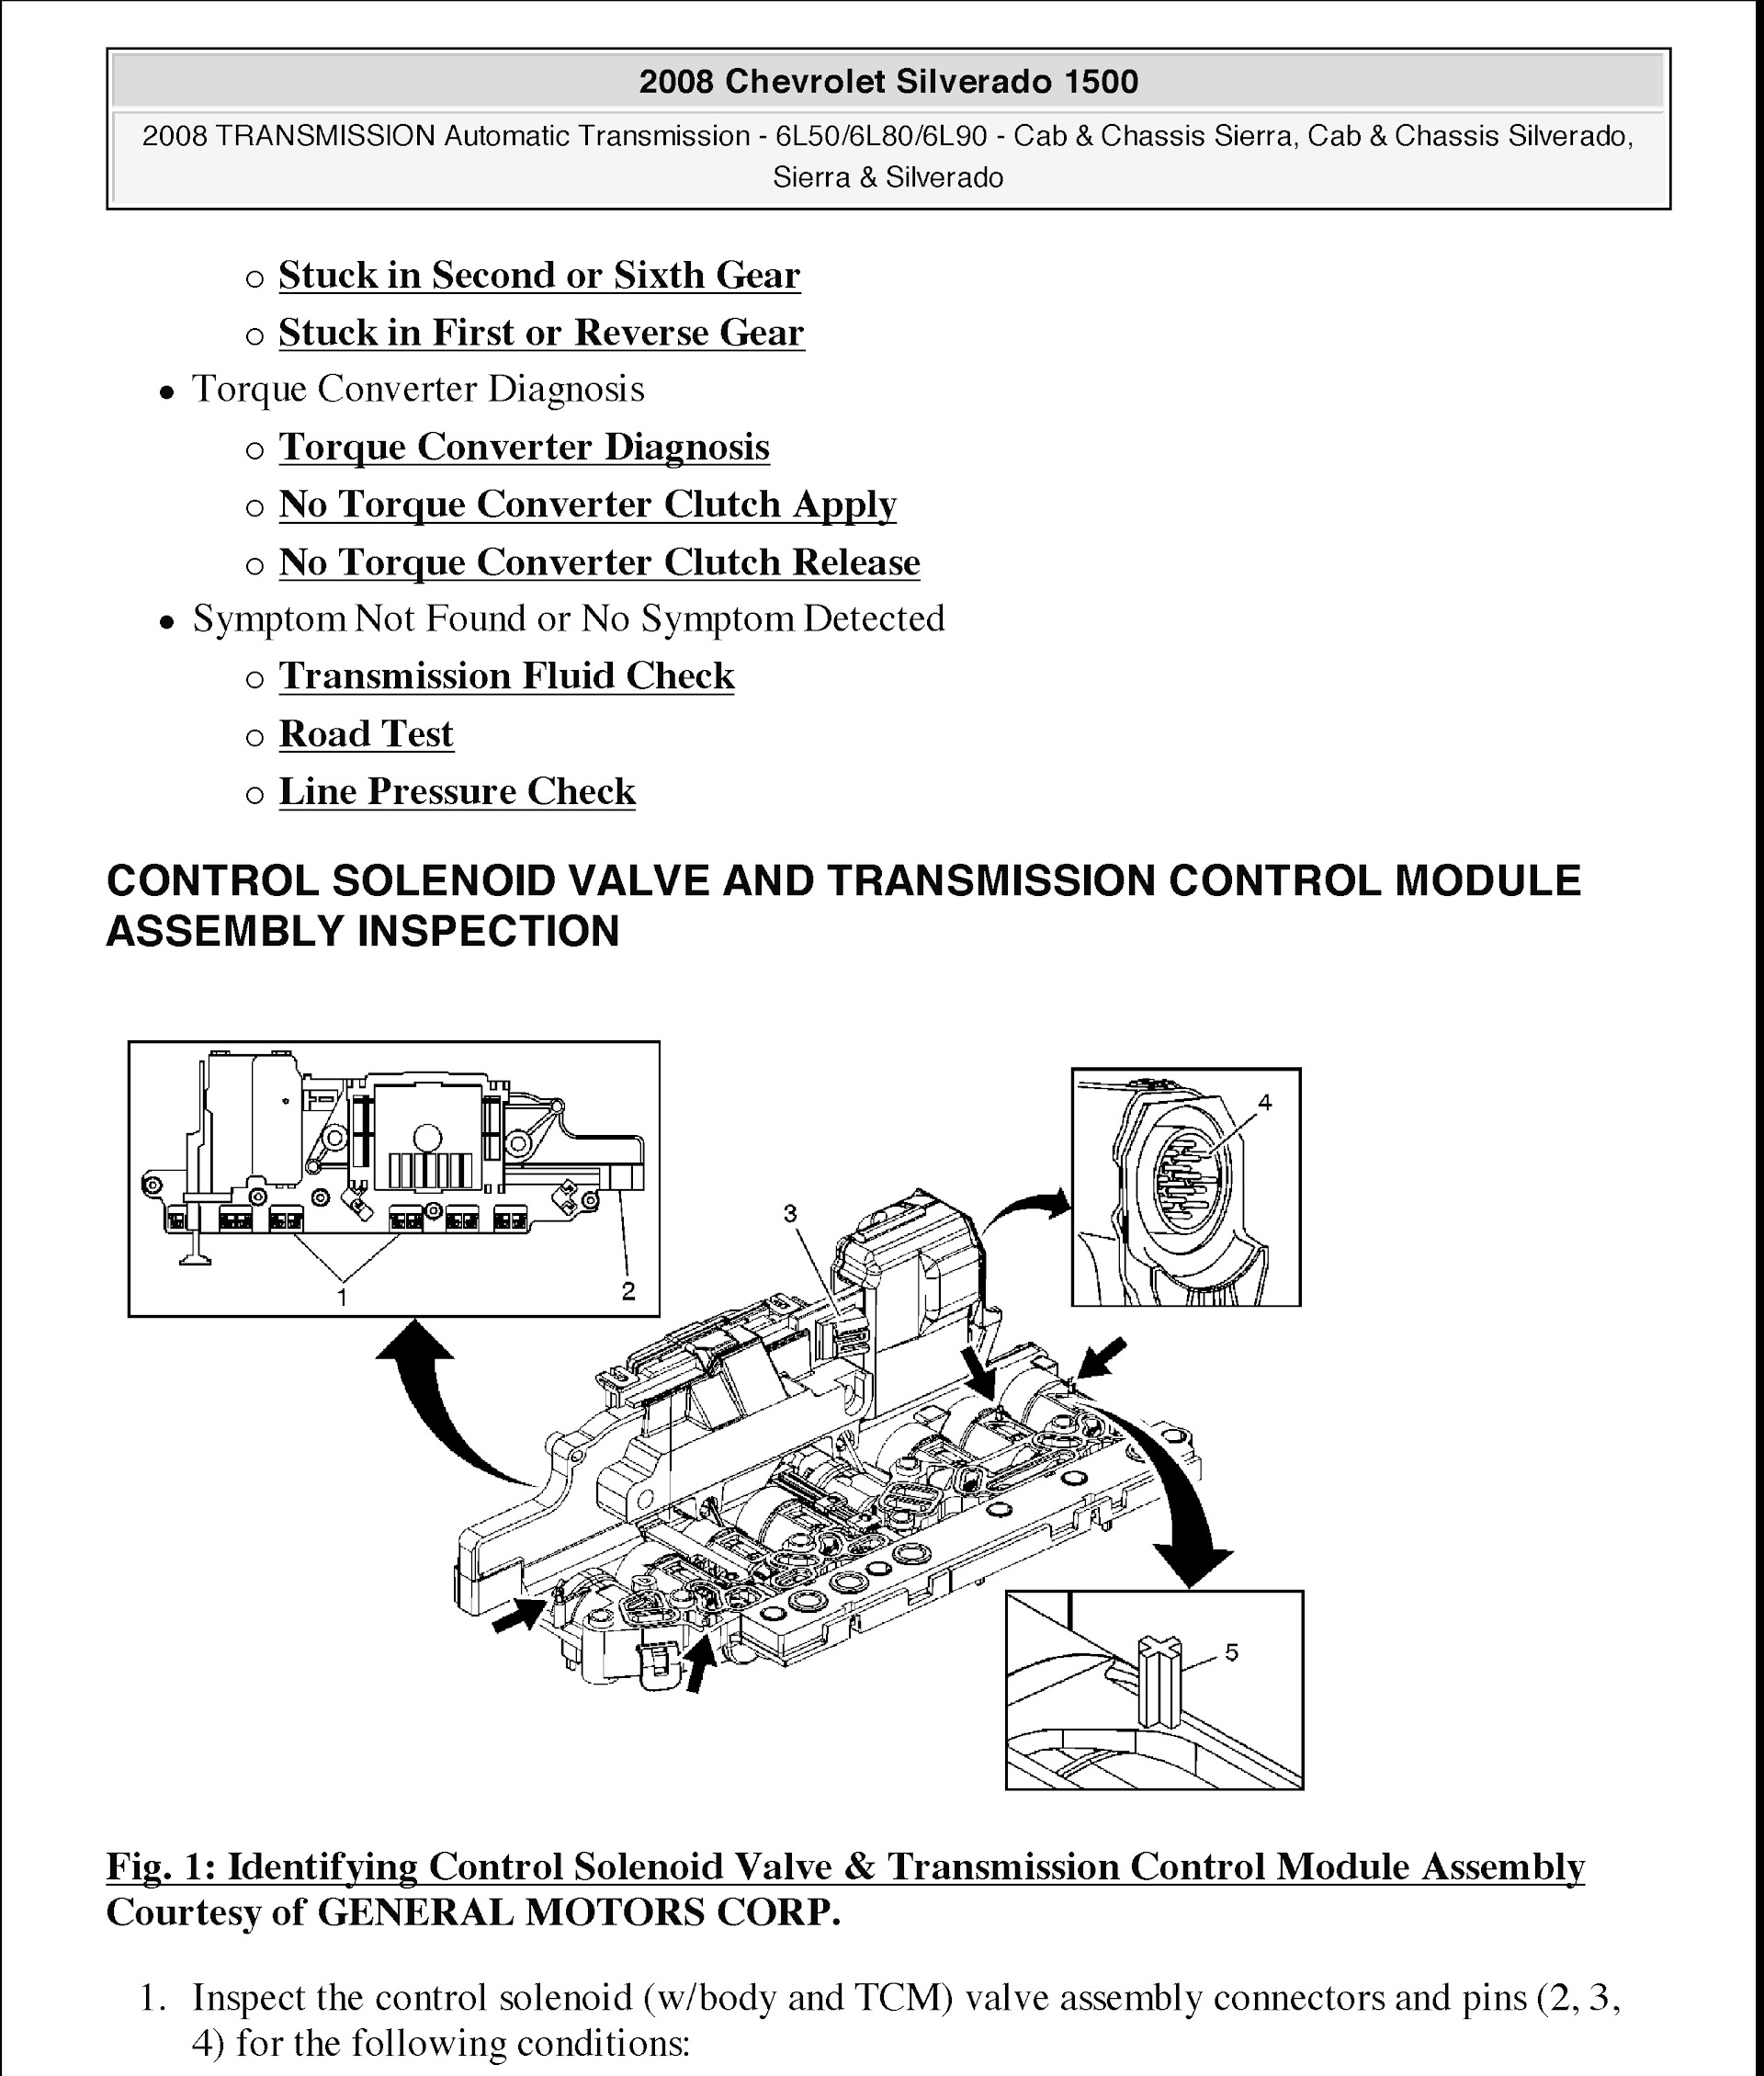 Chevrolet Silverado 1500 Repair Manual, Automatic Transmission